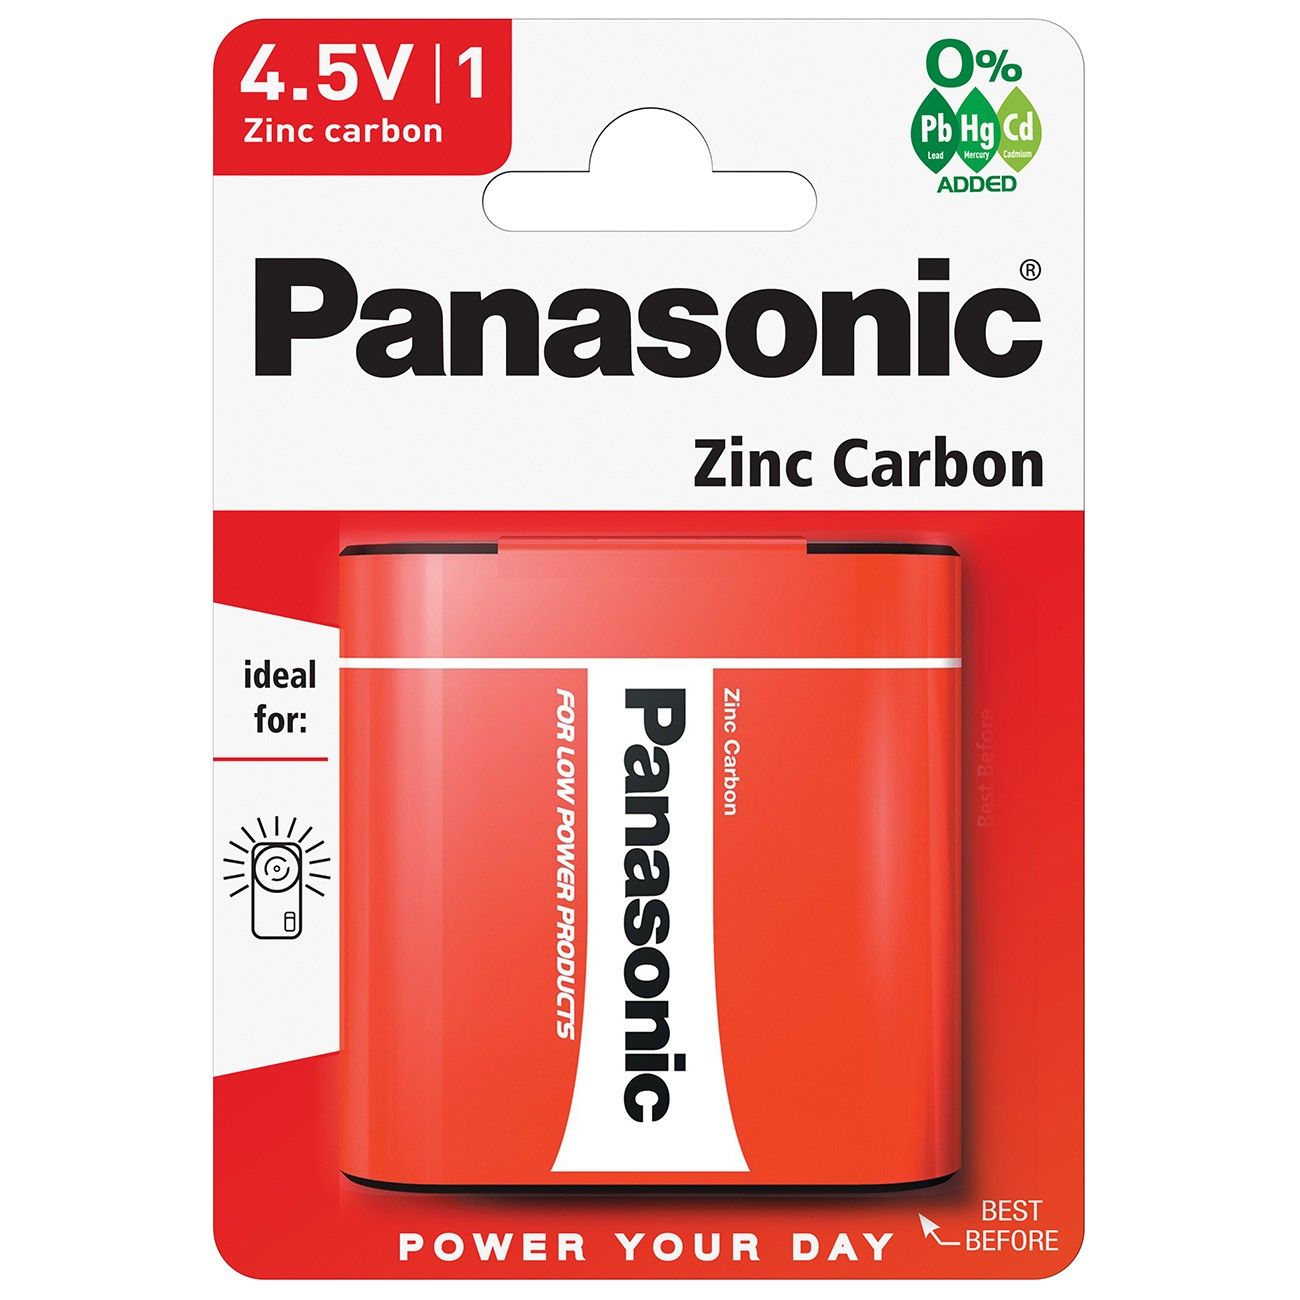 Zinc carbon. Батарейка Panasonic Zinc Carbon 3r12. Элемент питания Panasonic 3r12 (квадрат) Zinc Carbon bl1 (12/48). Элемент питания r14 Panasonic Zink Carbon (красный). Panasonic батарейка АА Zinc Carbon.